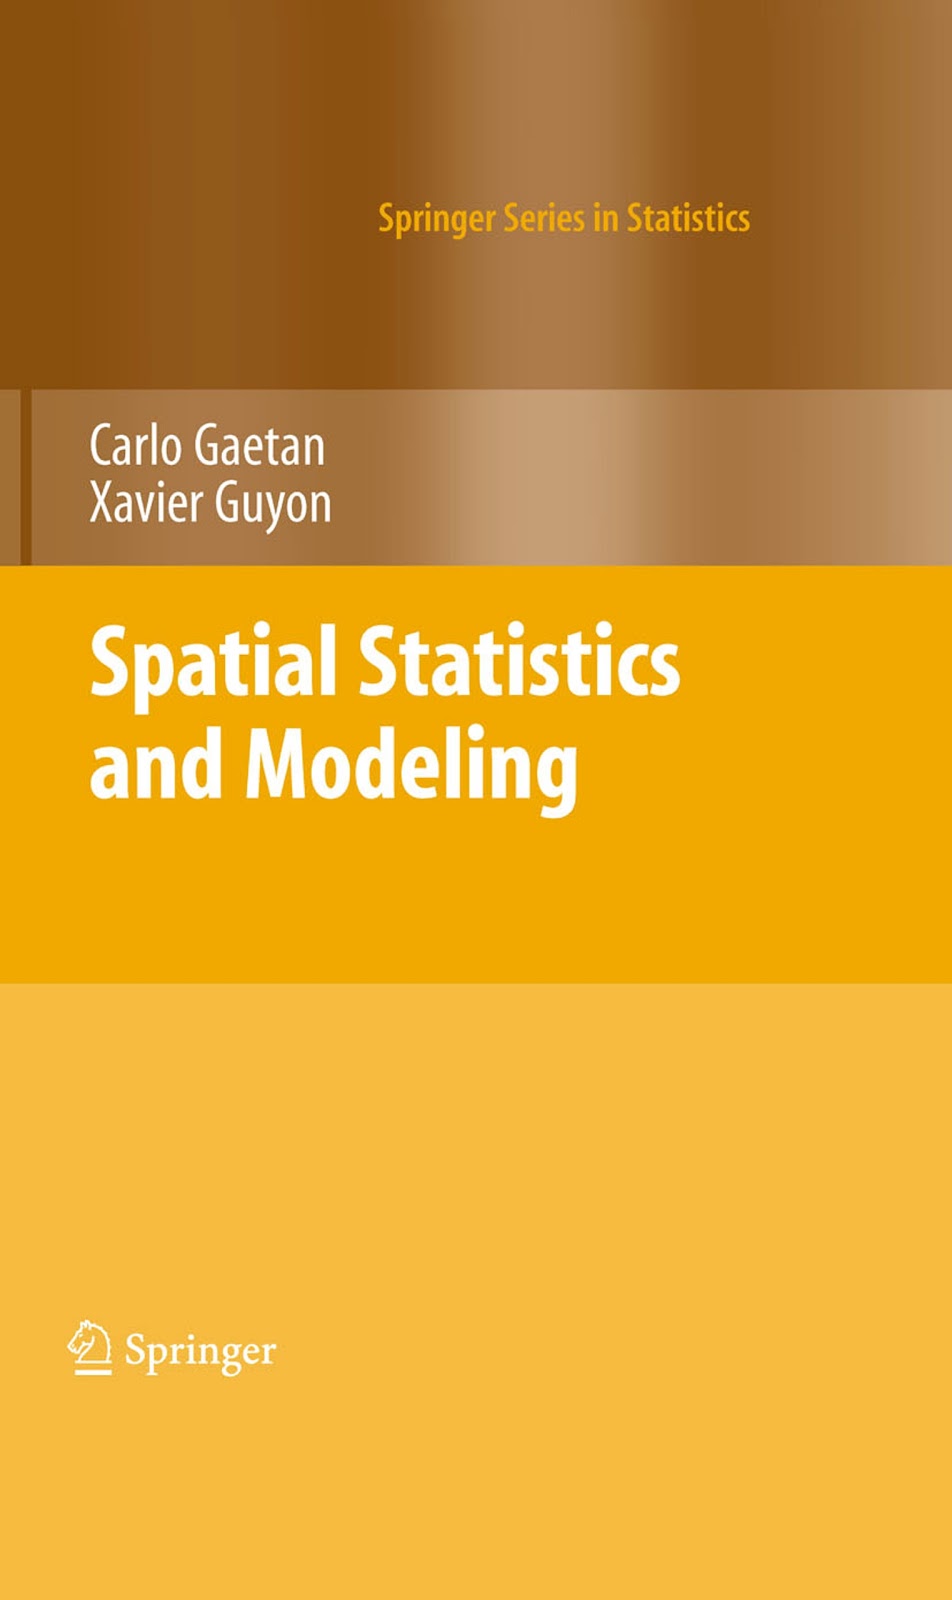 Free Ebook Download 1001tutorial.blogspot.com Spatial Statistics and Modeling